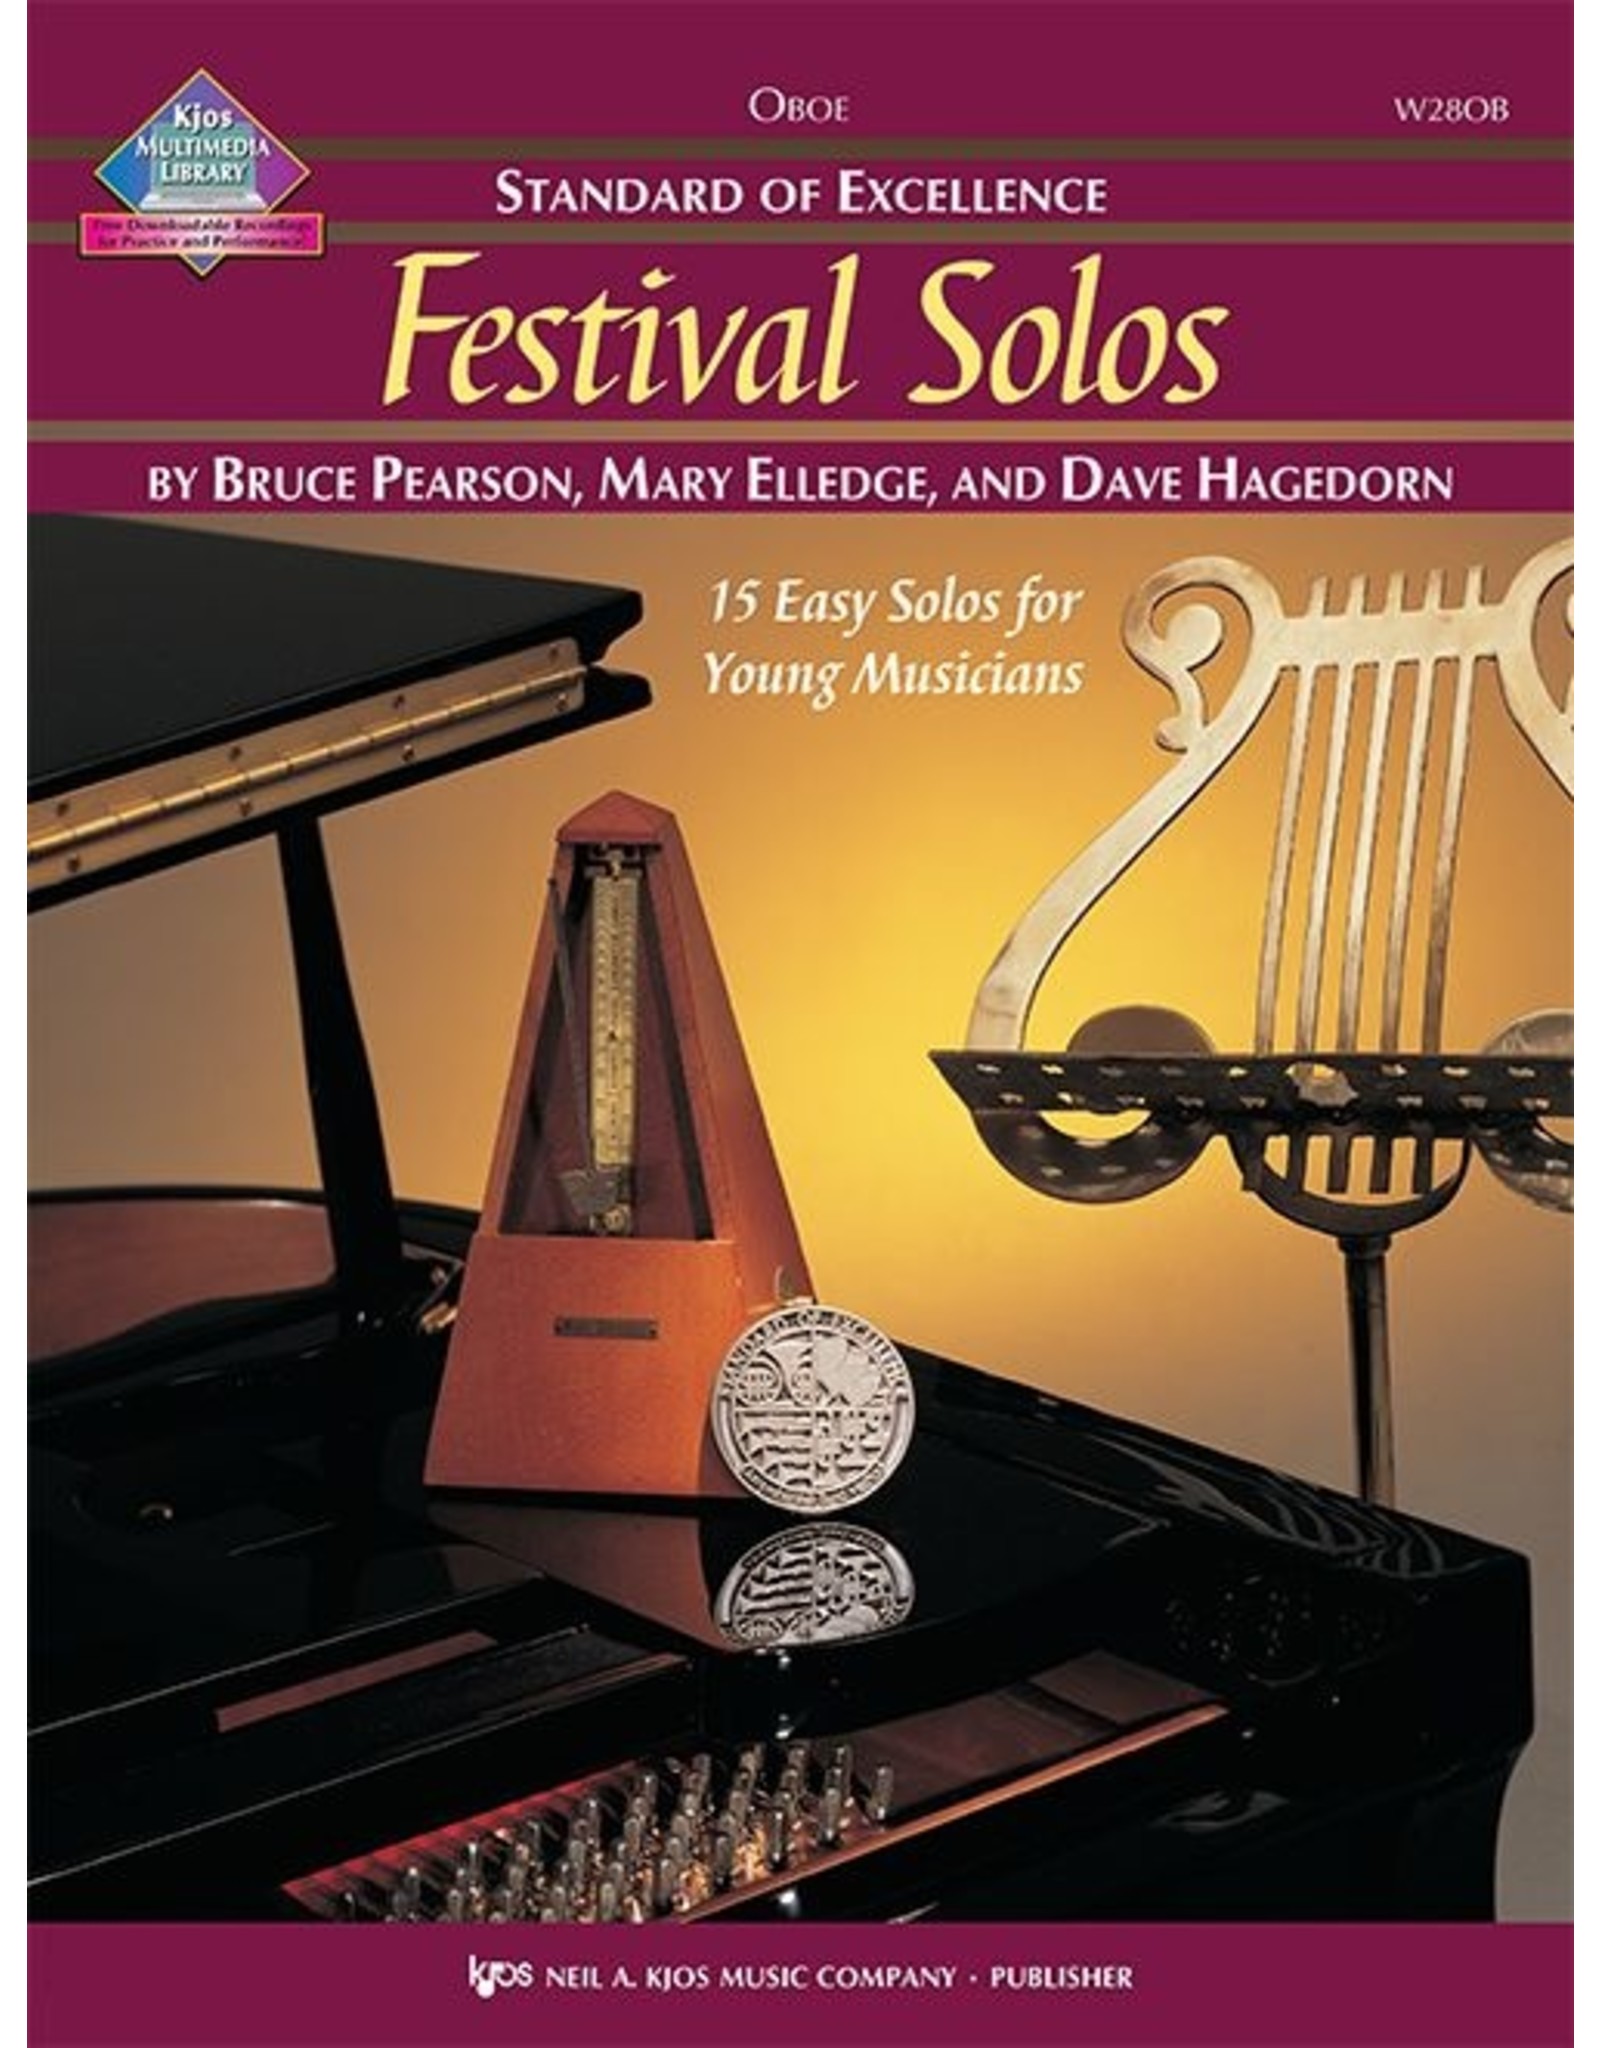 KJOS Soe: Festival Solos - Oboe - Bruce Pearson